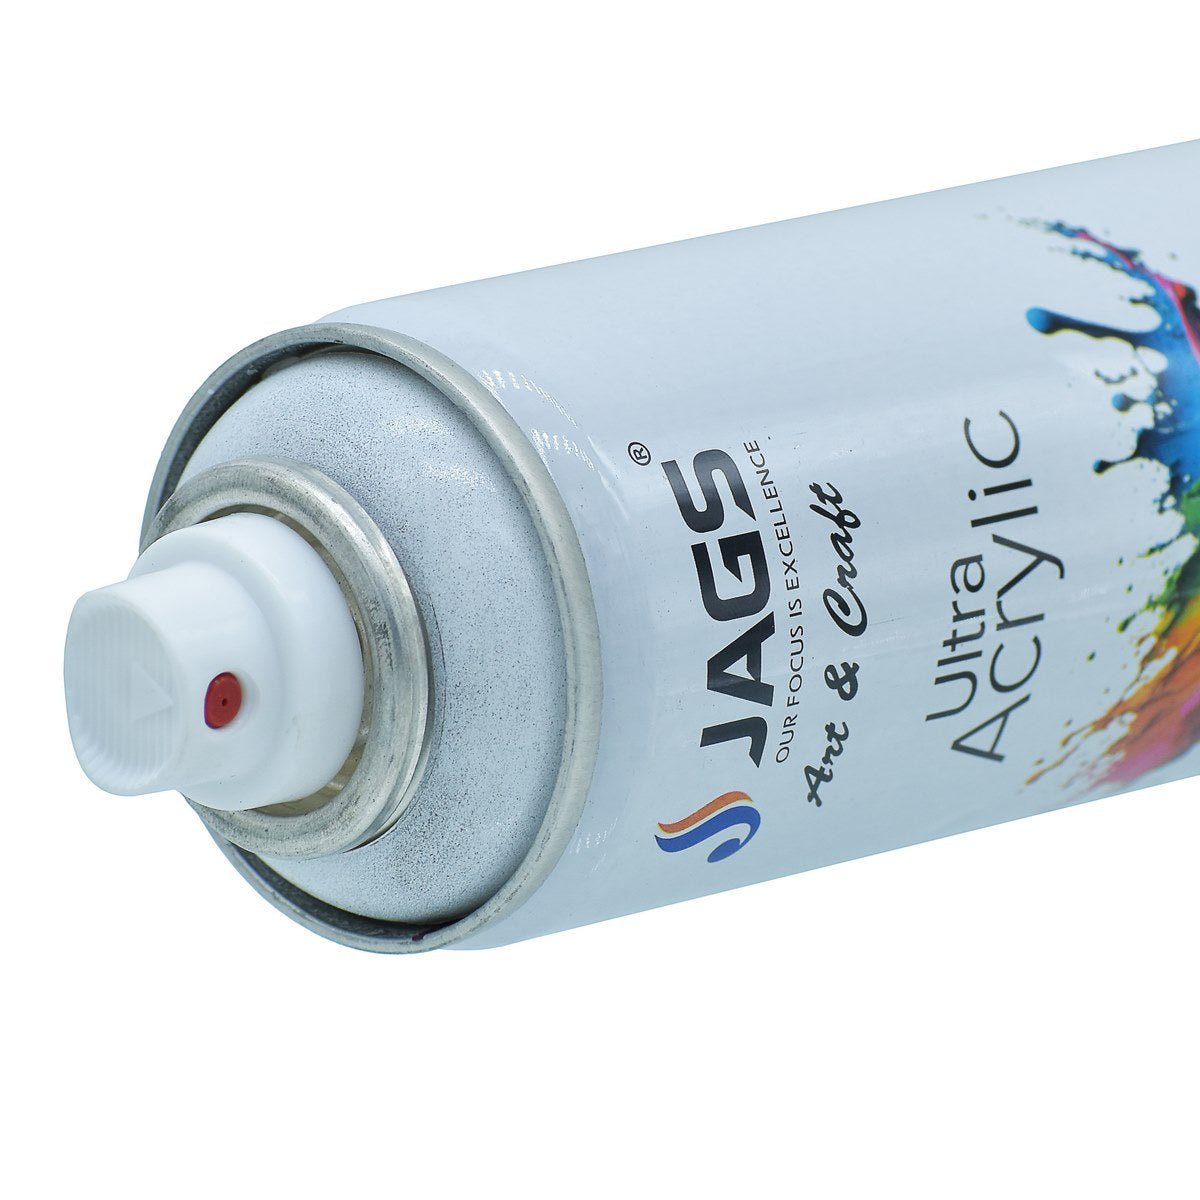 jags-mumbai Paint & Colours Premium White Matt Acrylic Spray Paint - 150ml Ultra Coverage